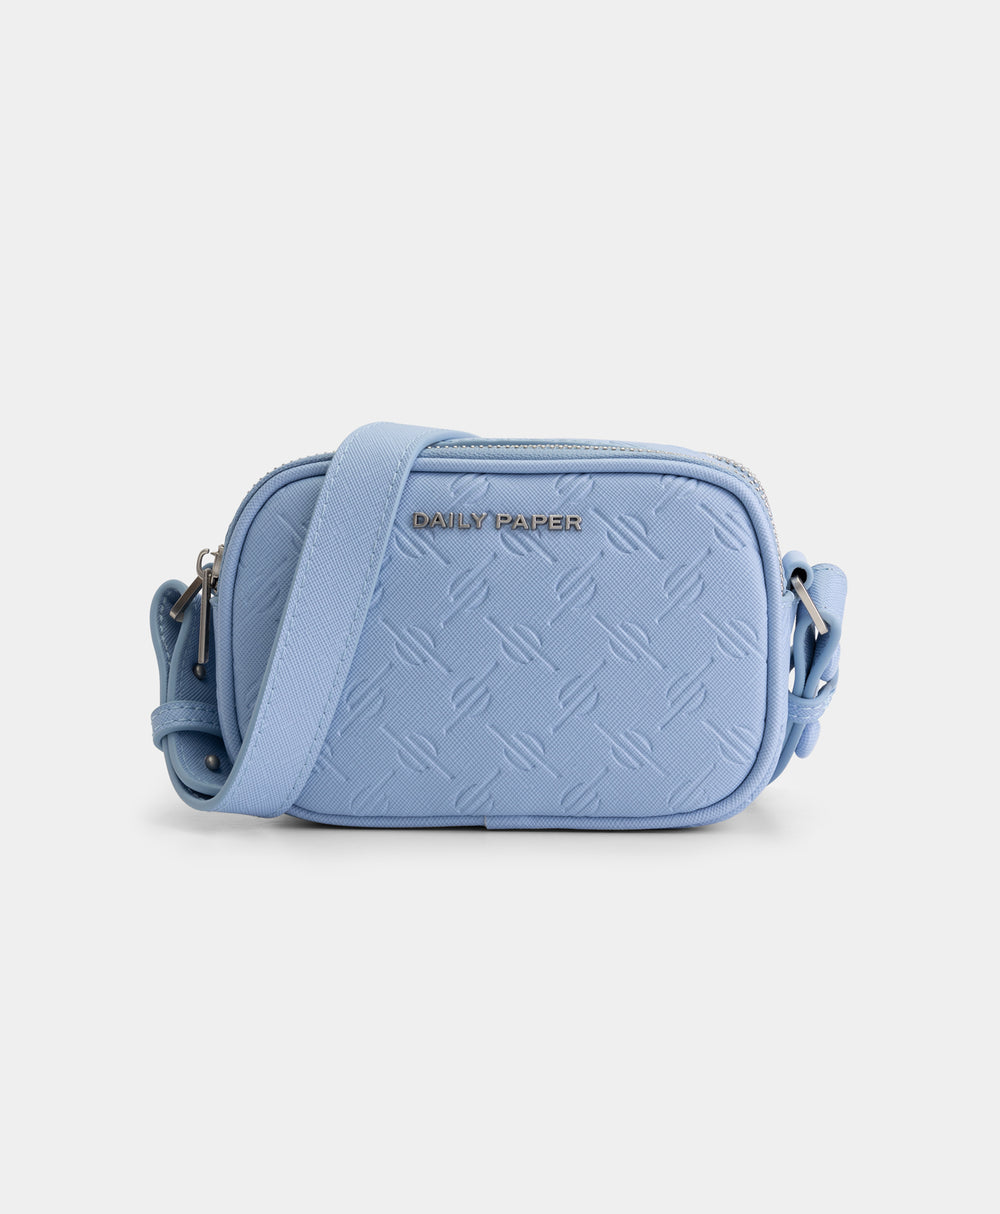 DP - Baby Blue May Monogram Bag - Packshot - Front 